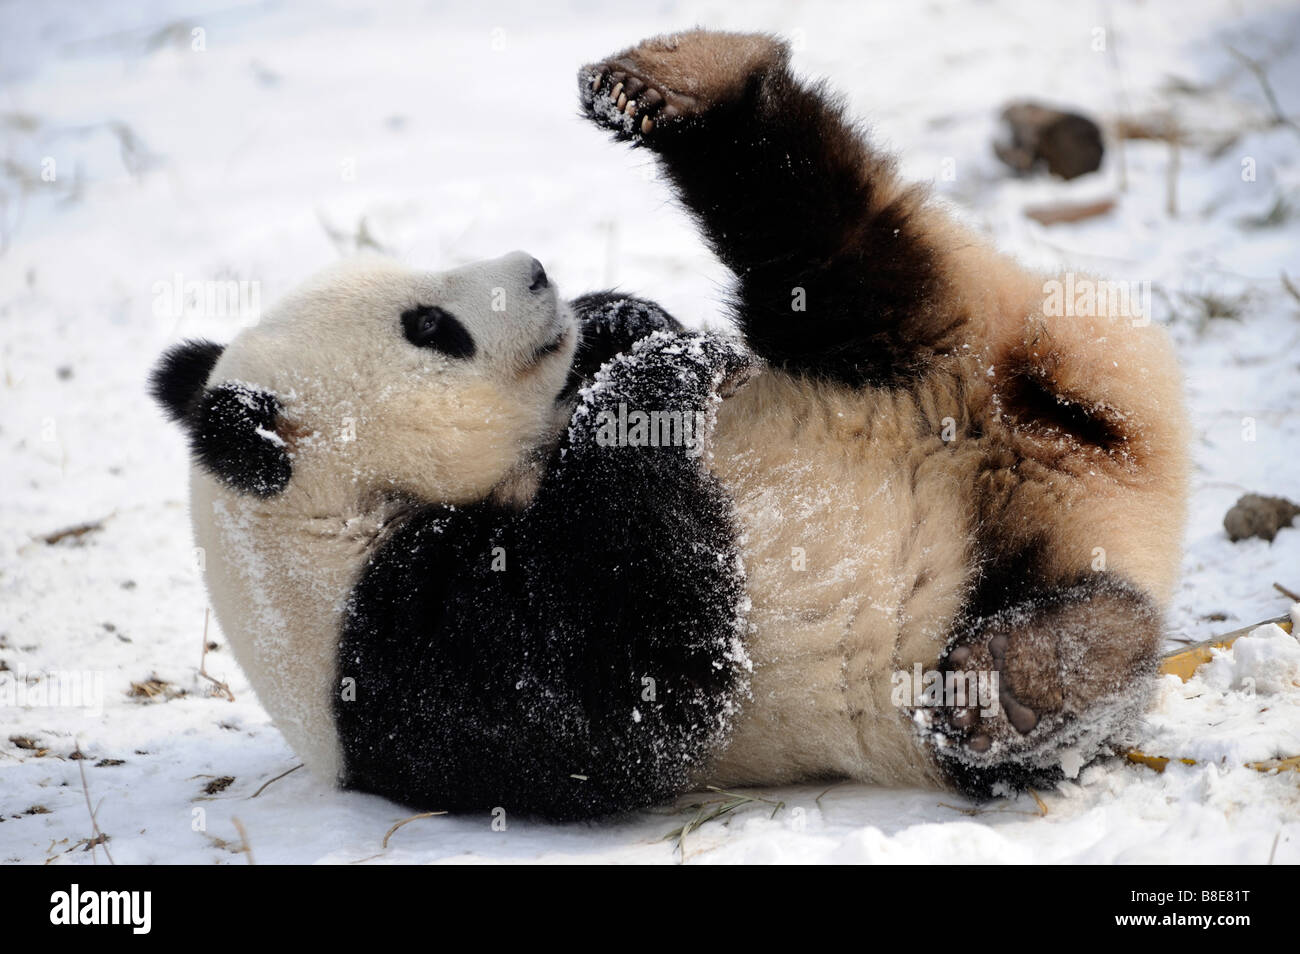 A giant panda at Beijing Zoo. 19-Feb-2009 Stock Photo